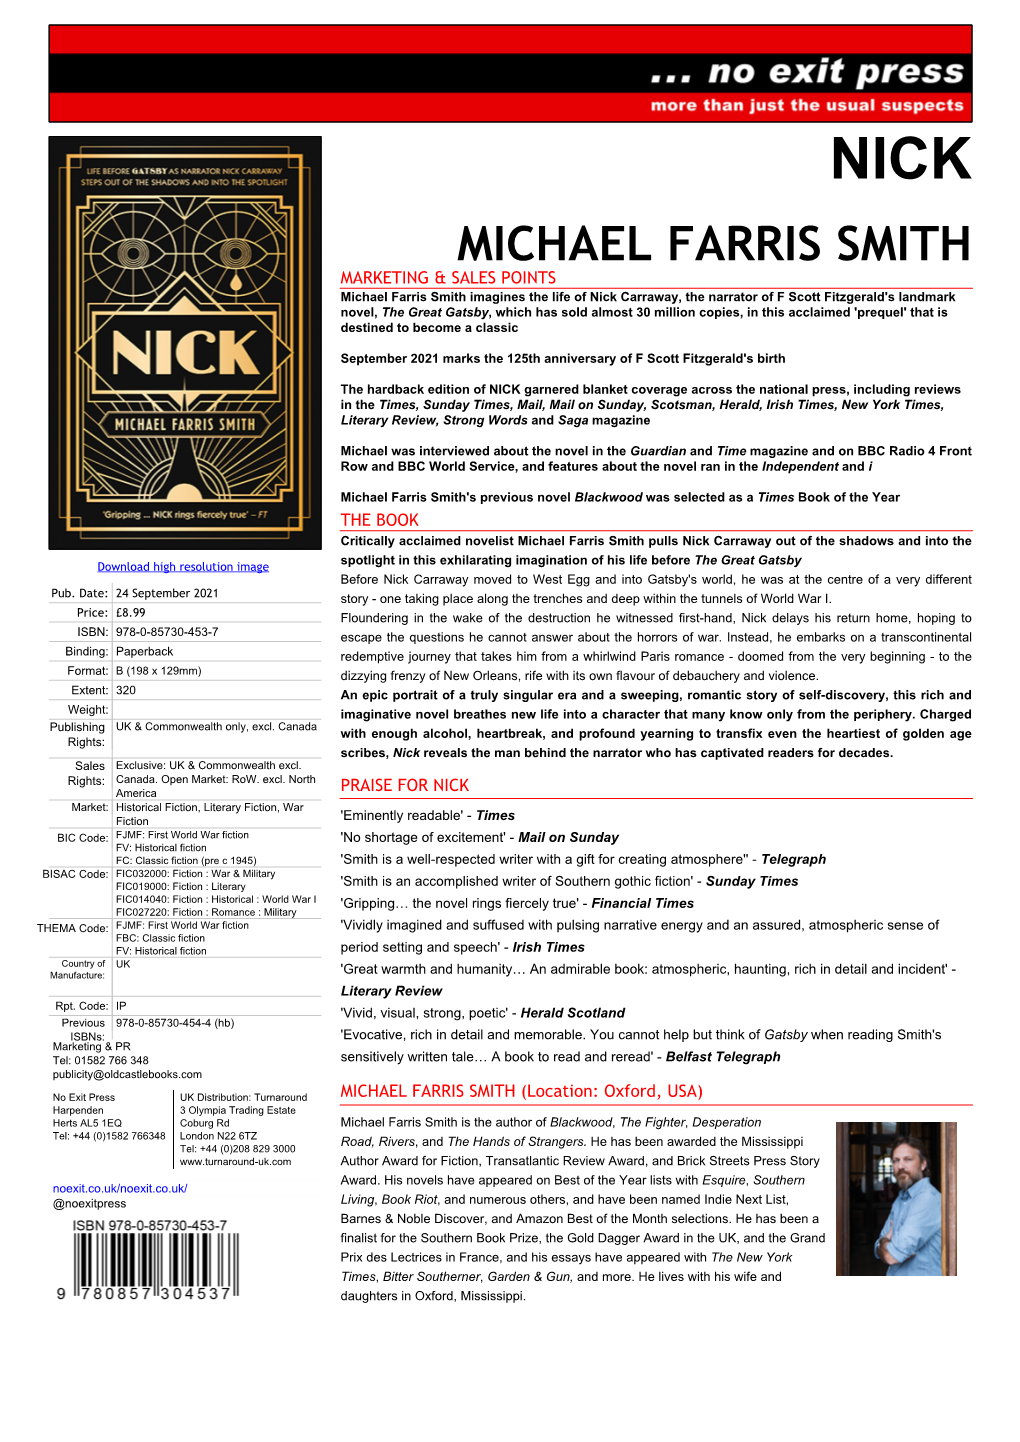 Michael Farris Smith